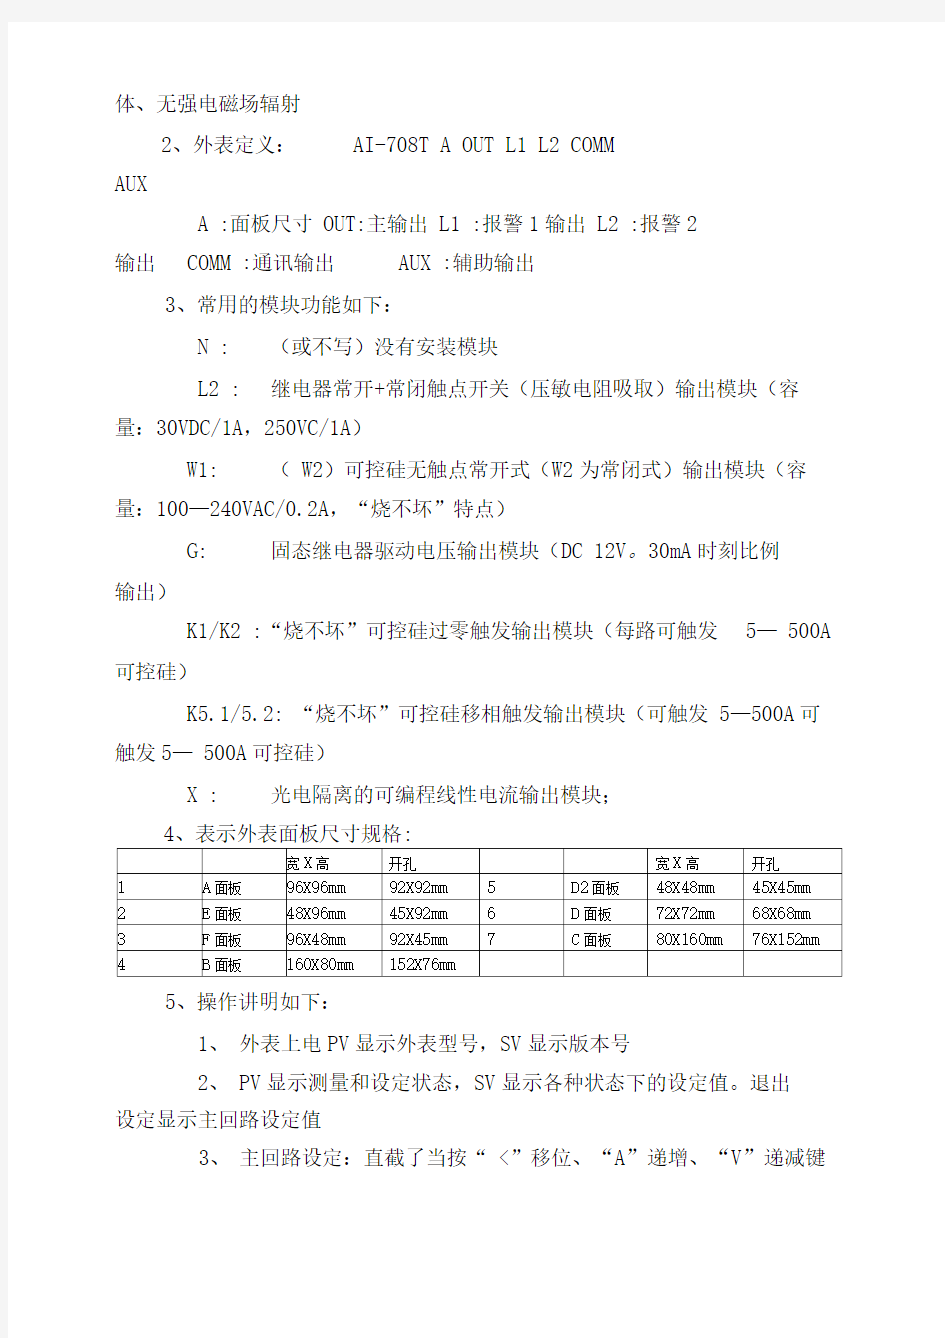 AI-708T经济型仪表使用说明书1、仪表技术指标(1